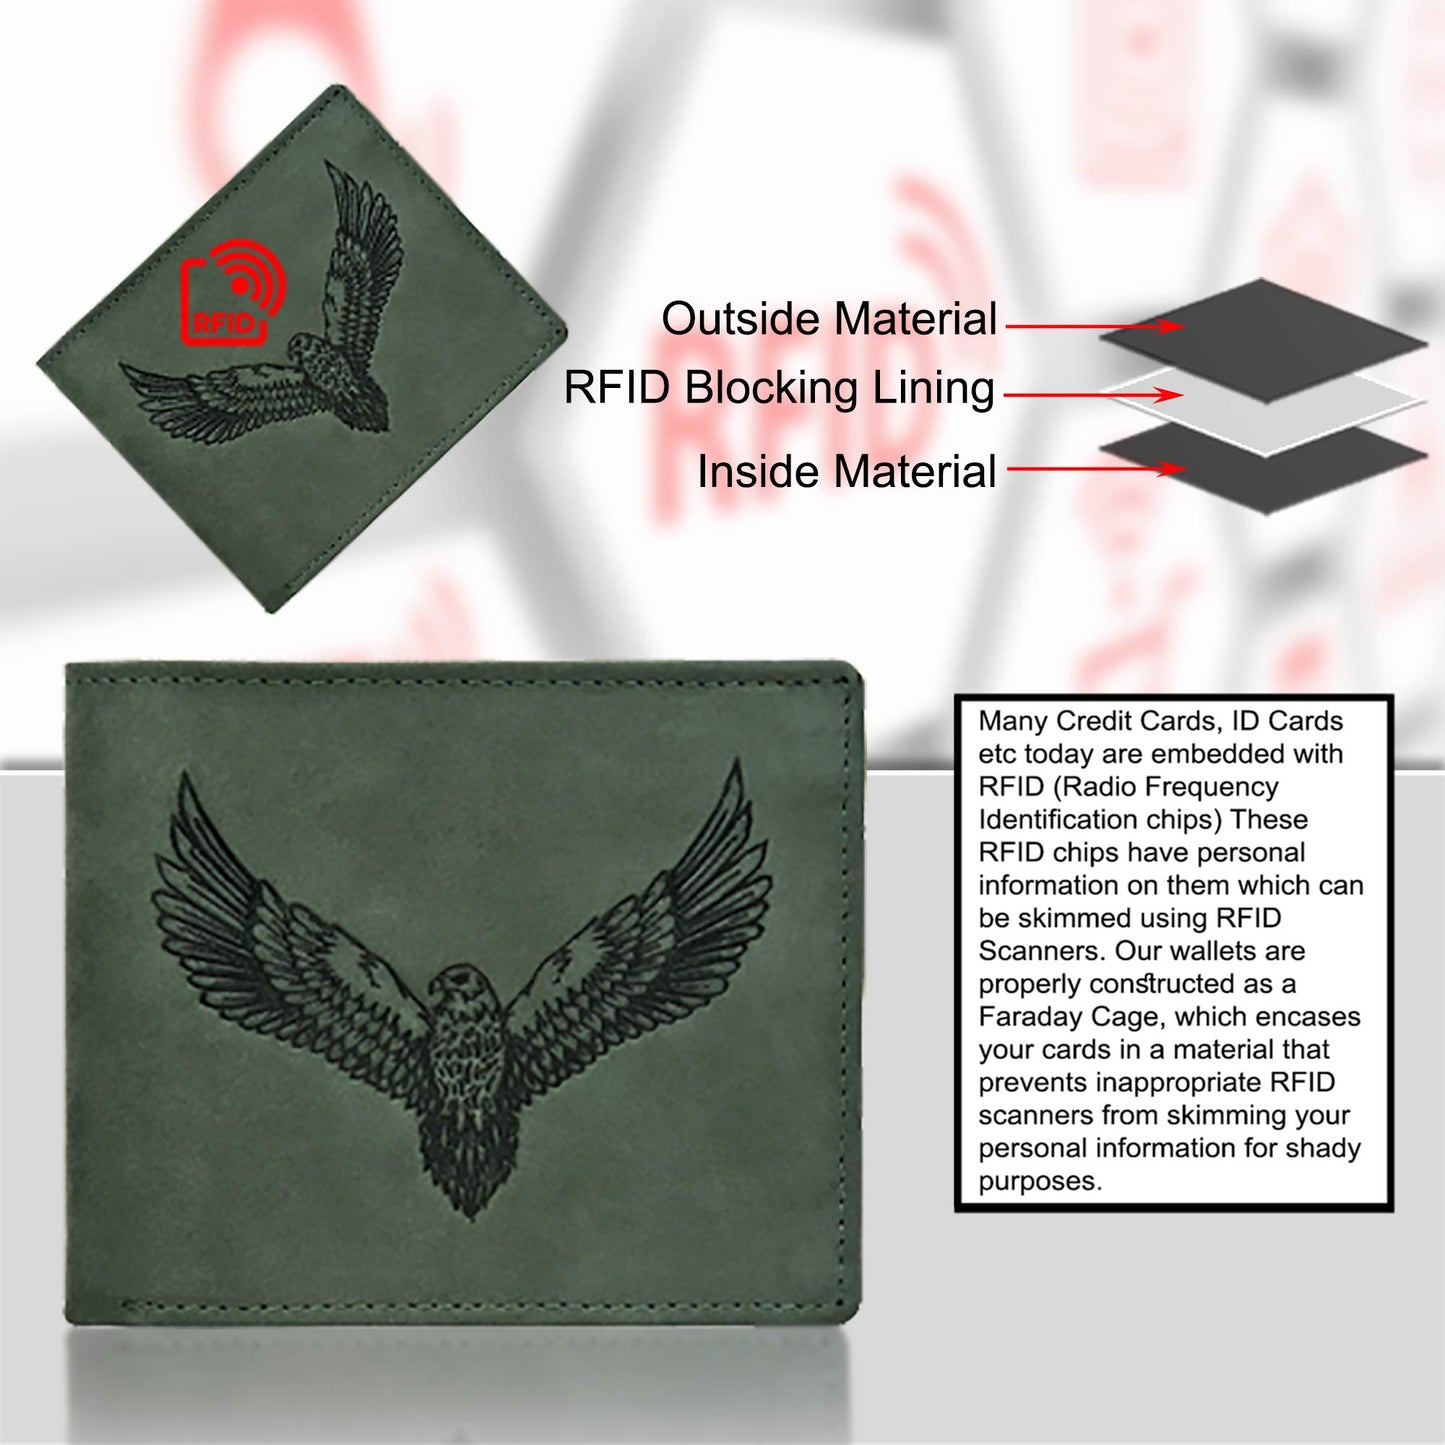 URBAN FOREST Zeus Vintage Green Leather Wallet for Men